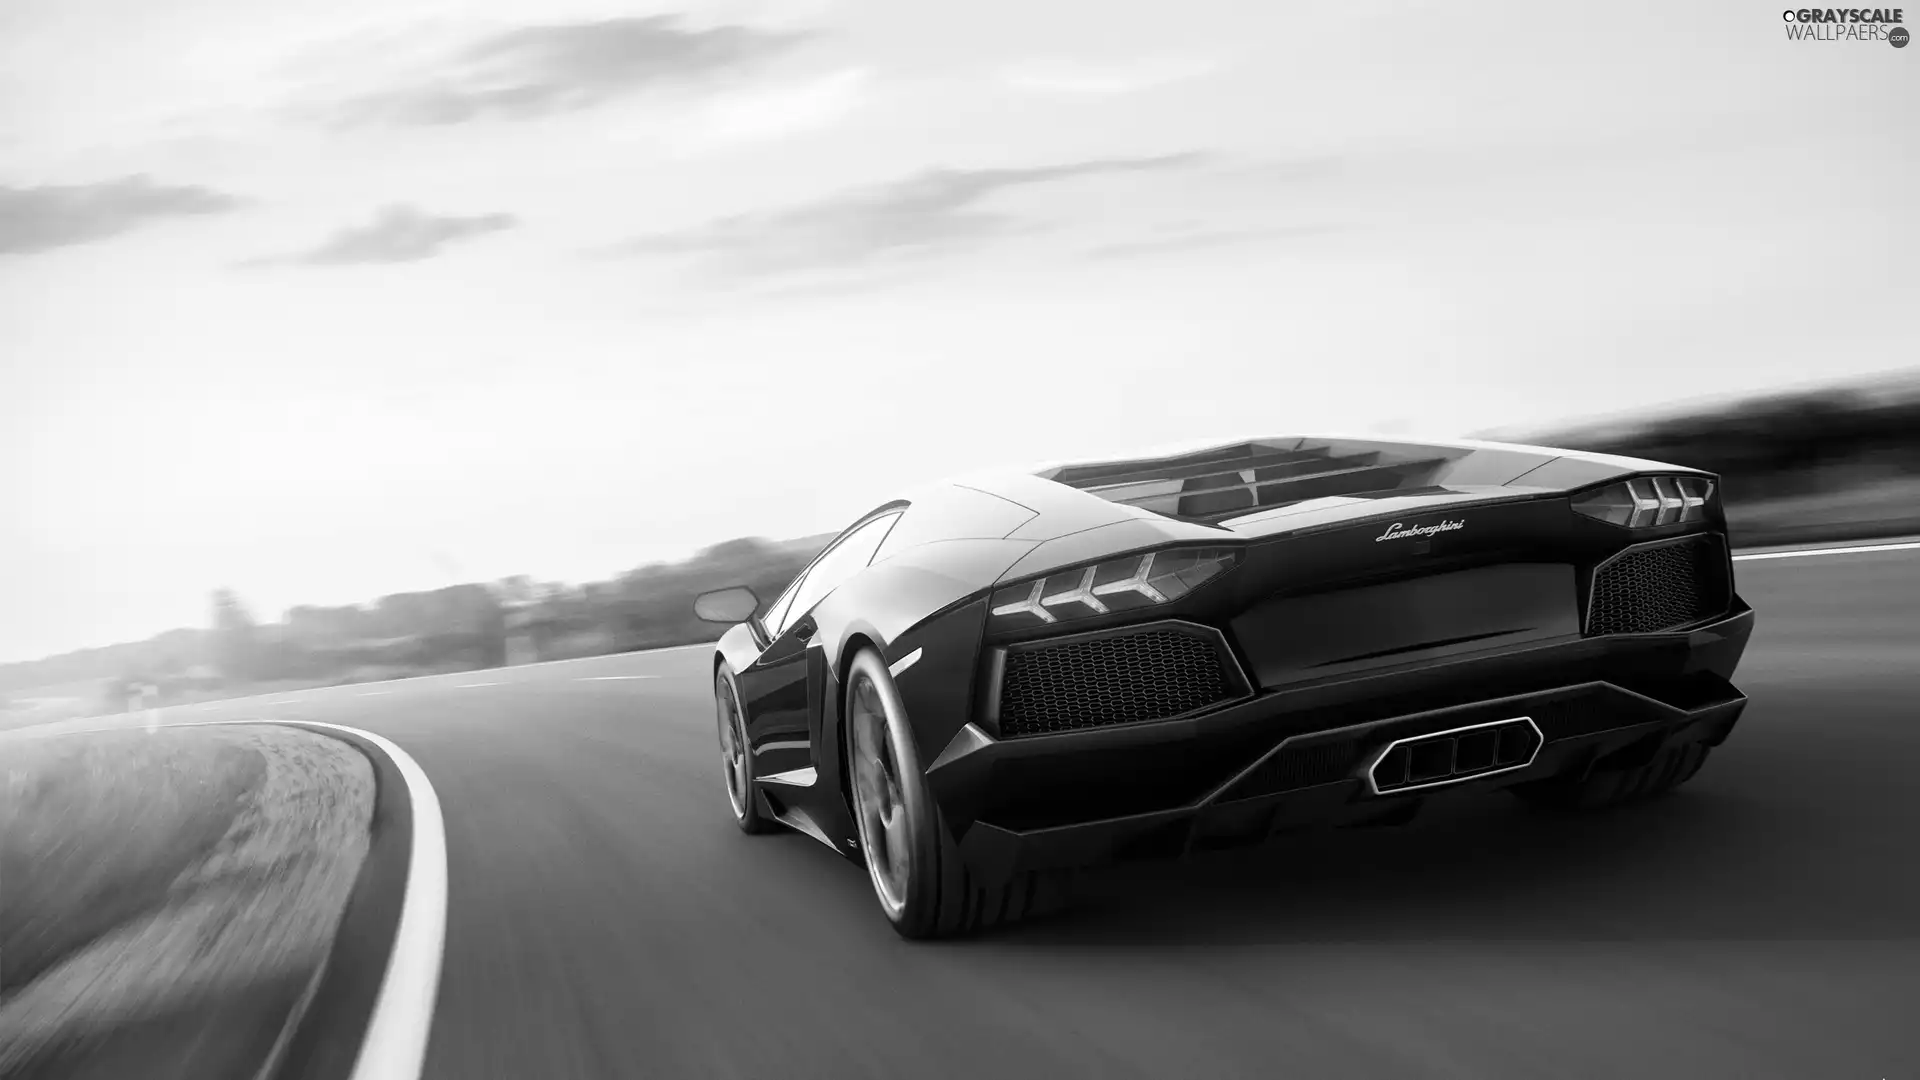 Art, track, Lamborghini, Aventador, Black